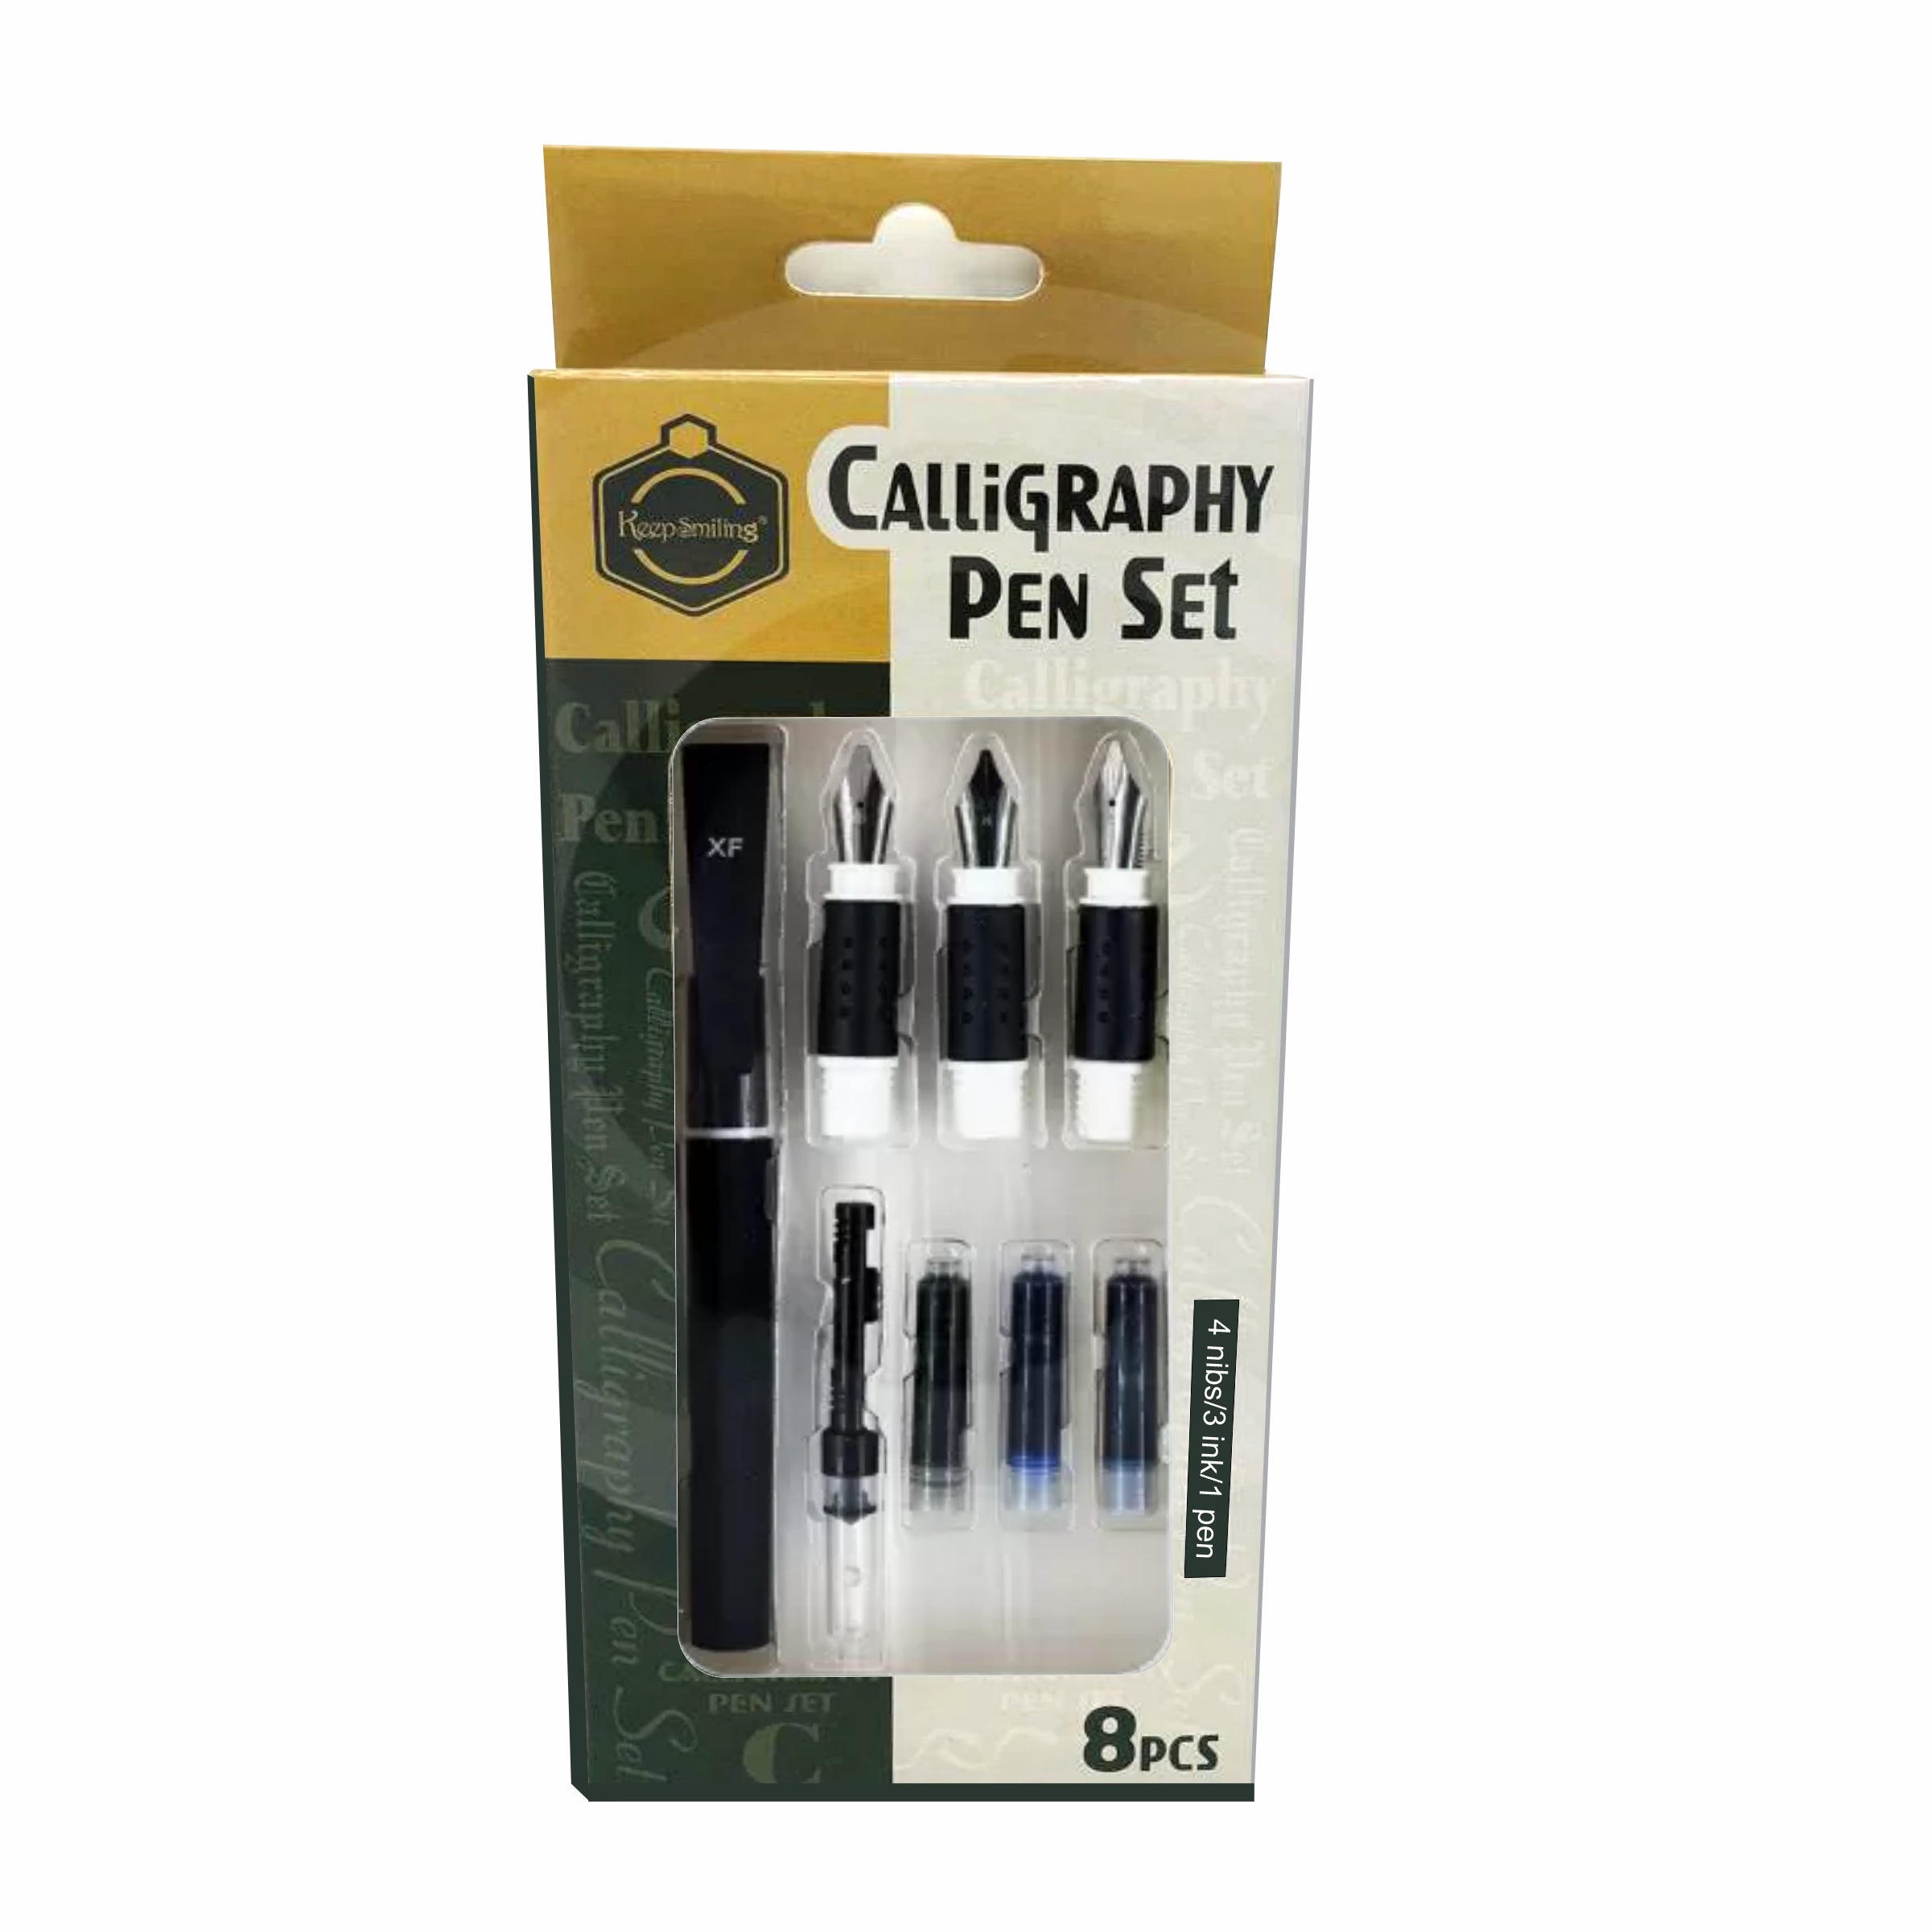 keep Smiling Calligraphy Pen Set